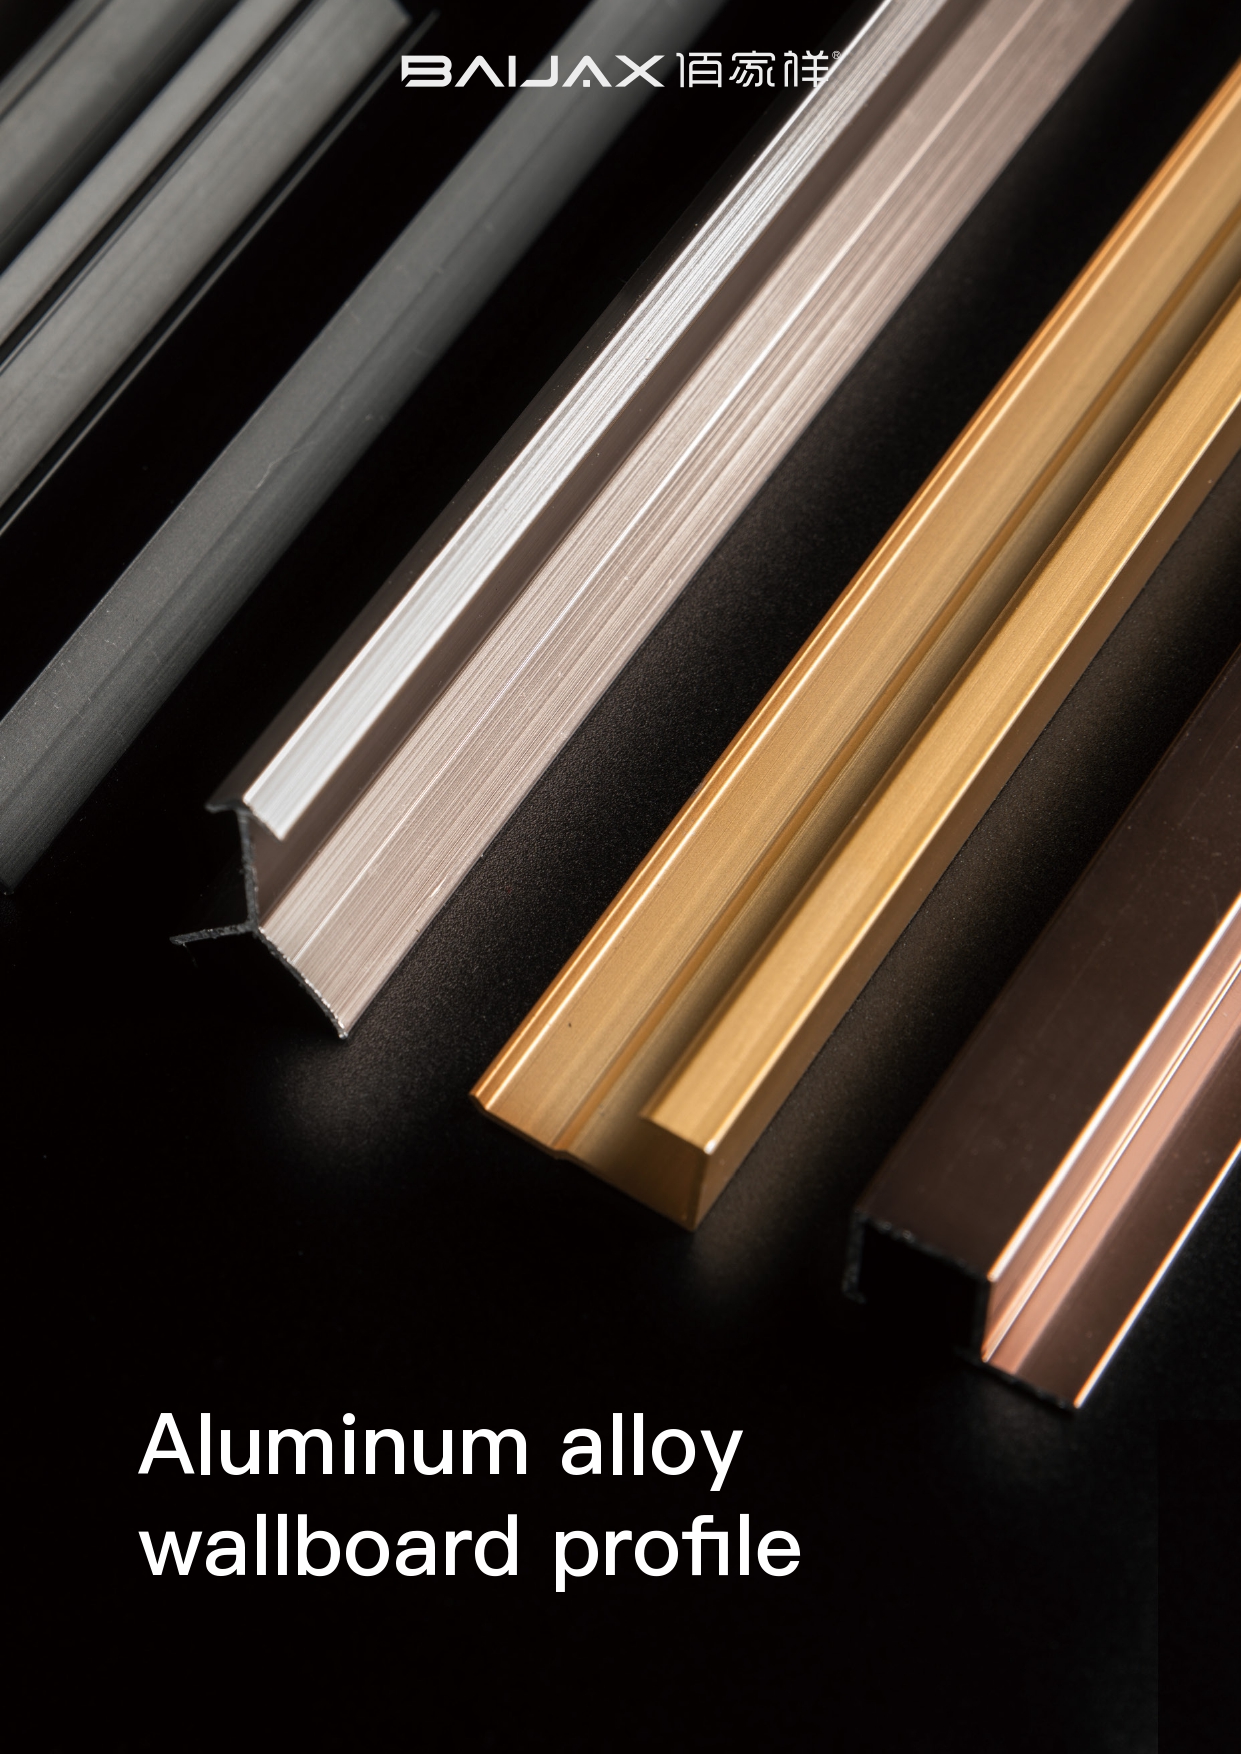 wallboard Aluminum alloy profile of BAIJAX_page-0001